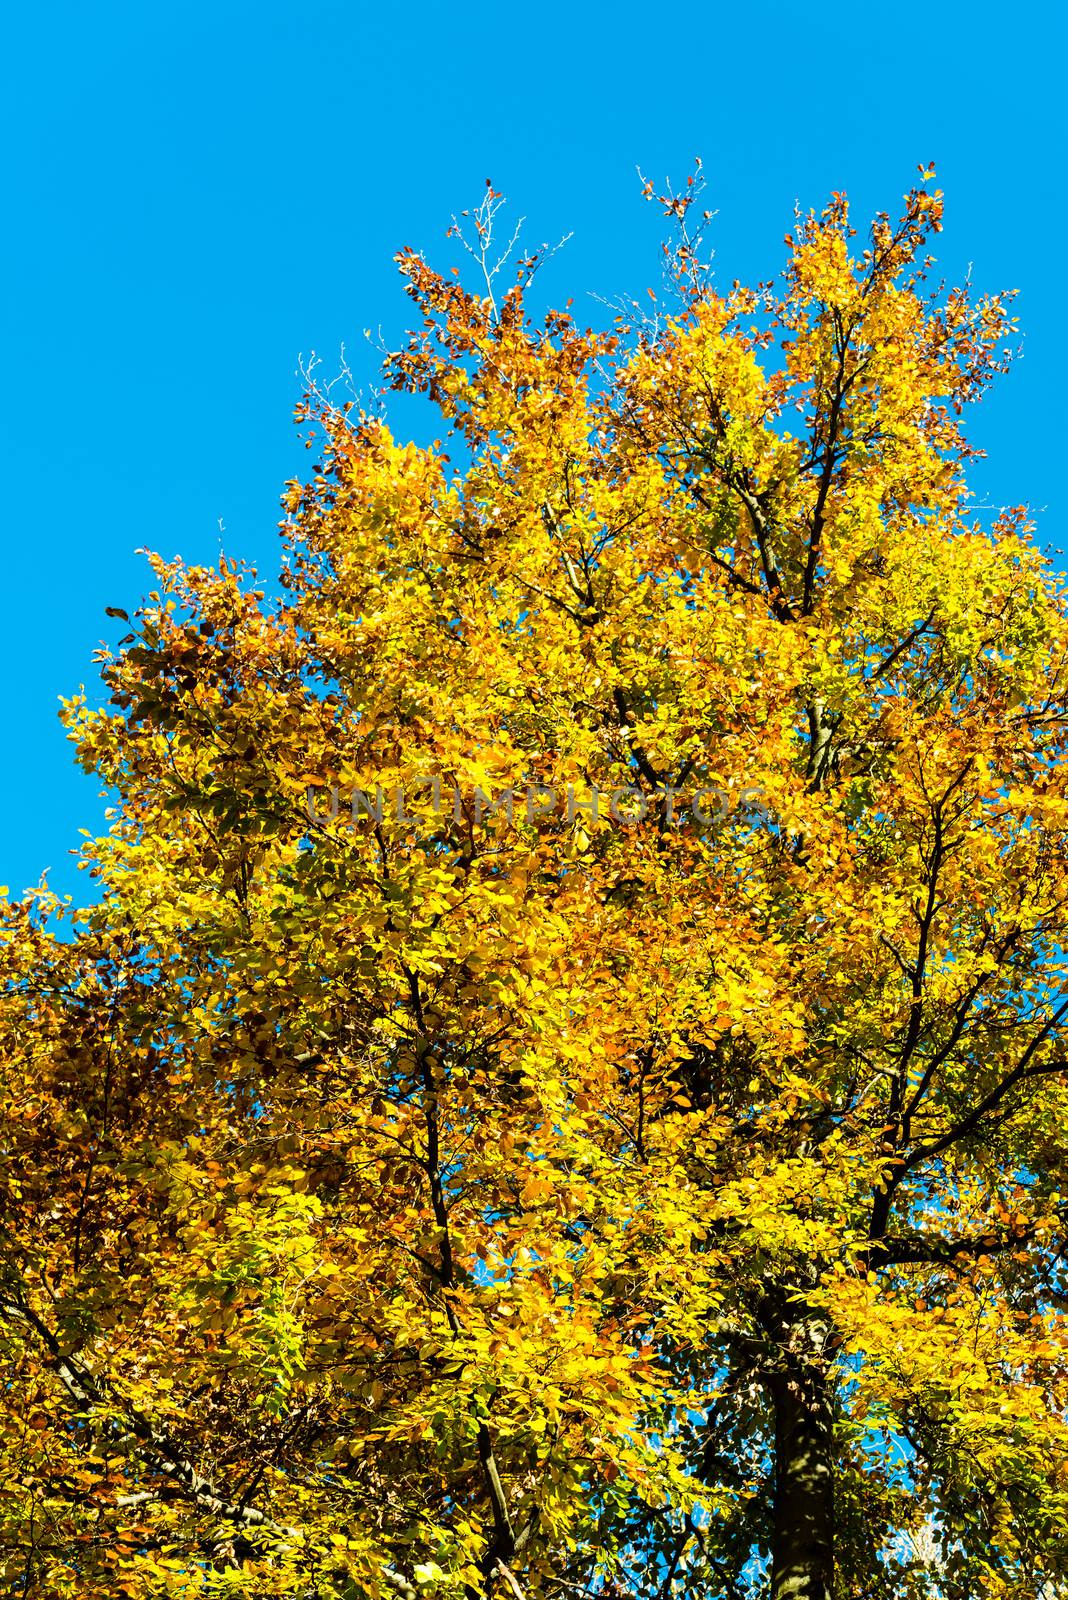 Autumn foliage against blue sky by franky242